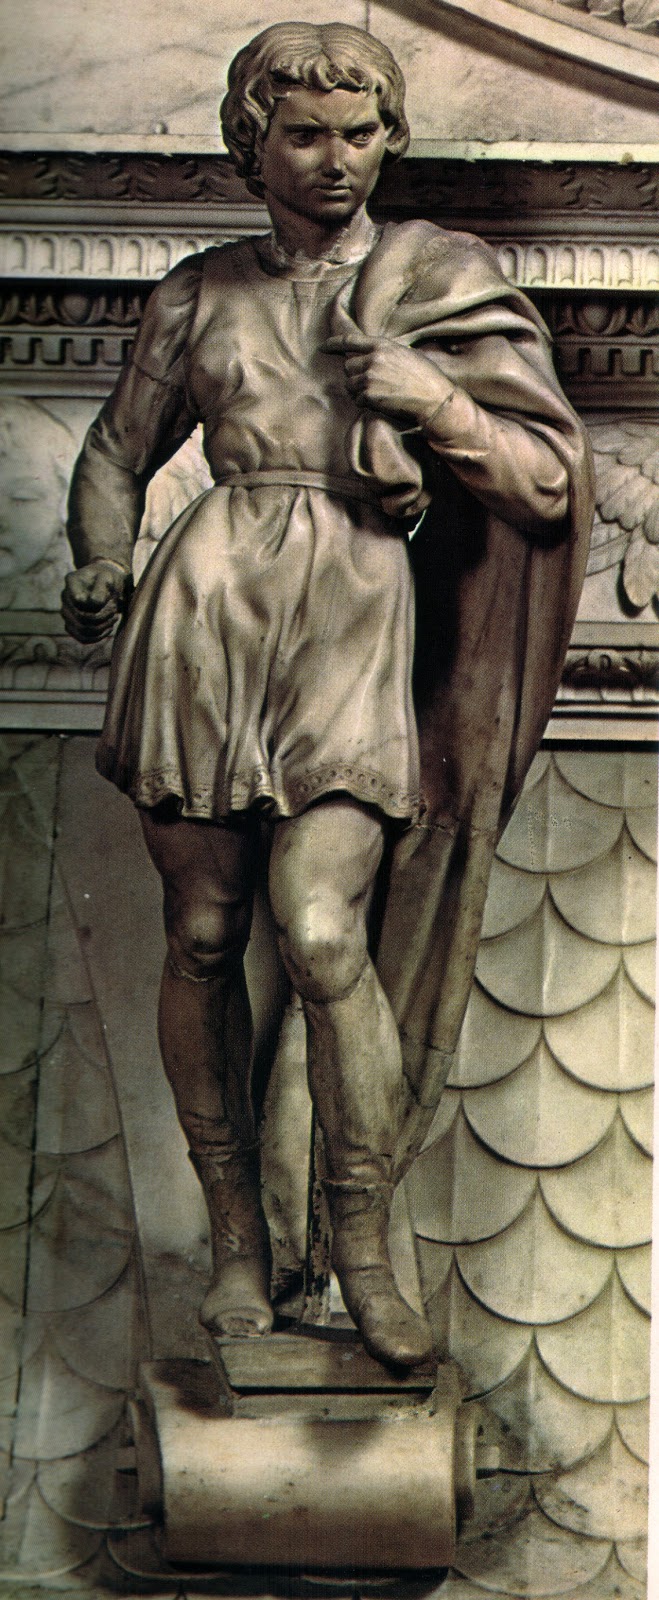 Michelangelo+Buonarroti-1475-1564 (317).jpg